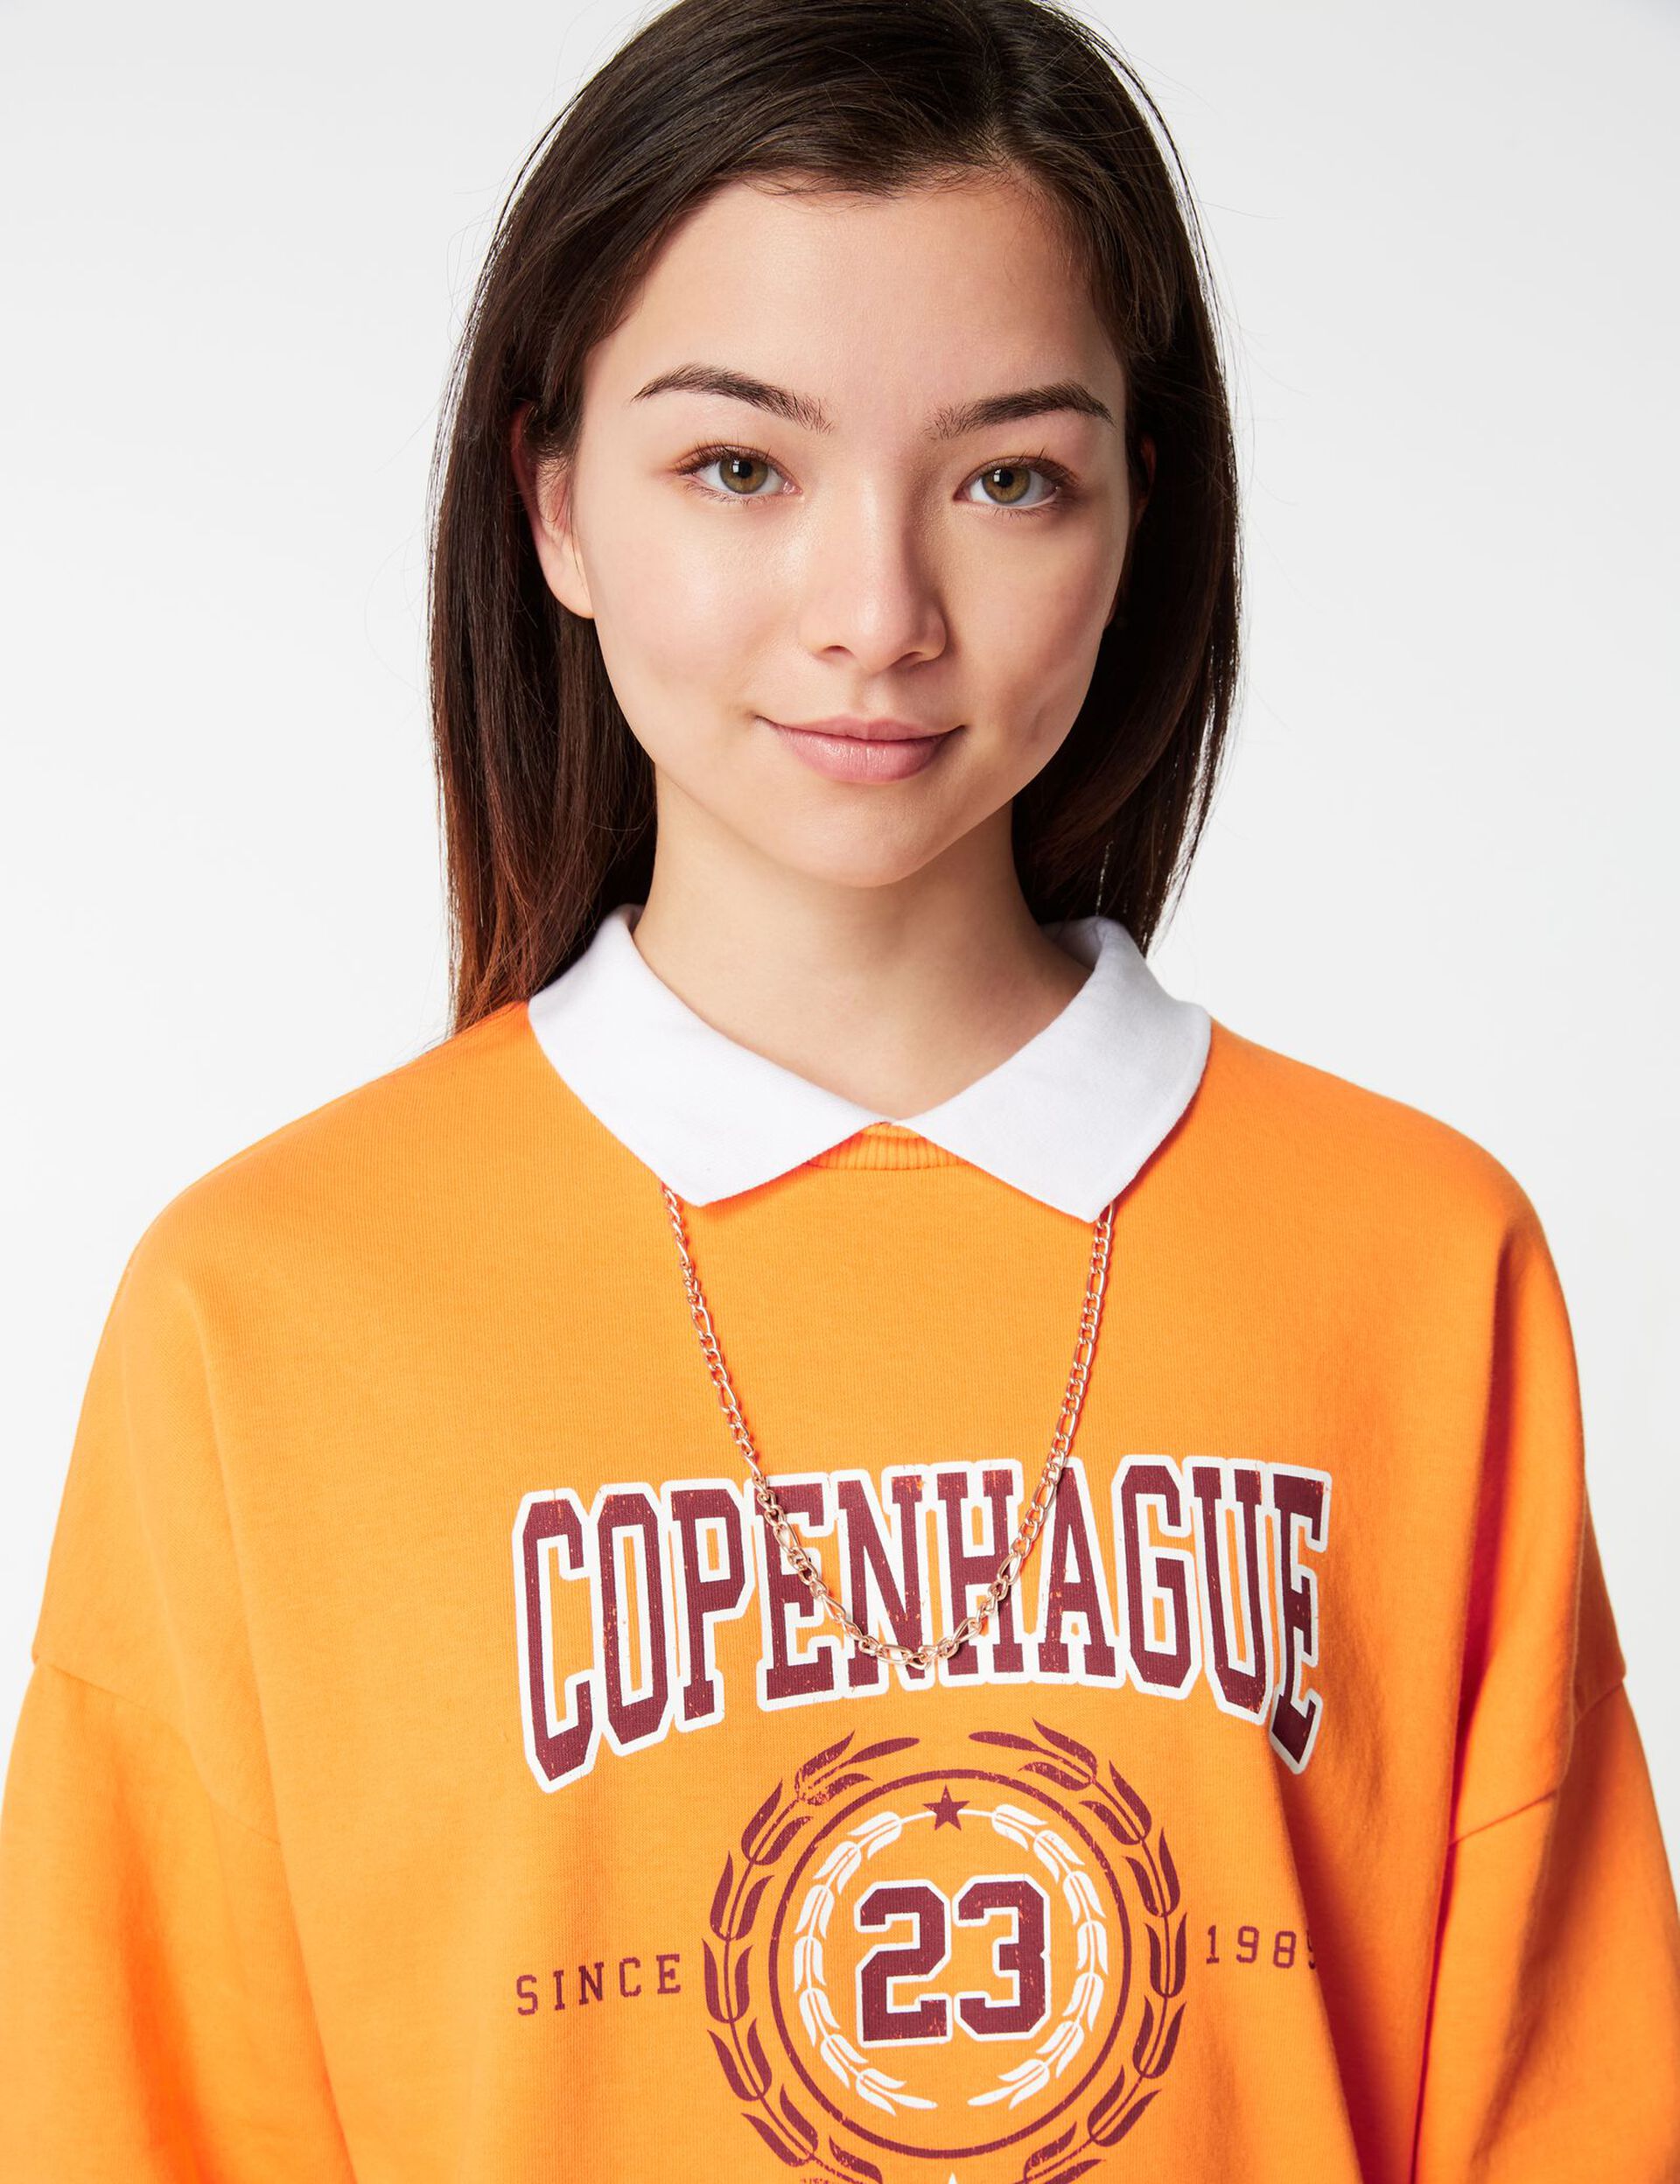 Copenhague collared sweatshirt